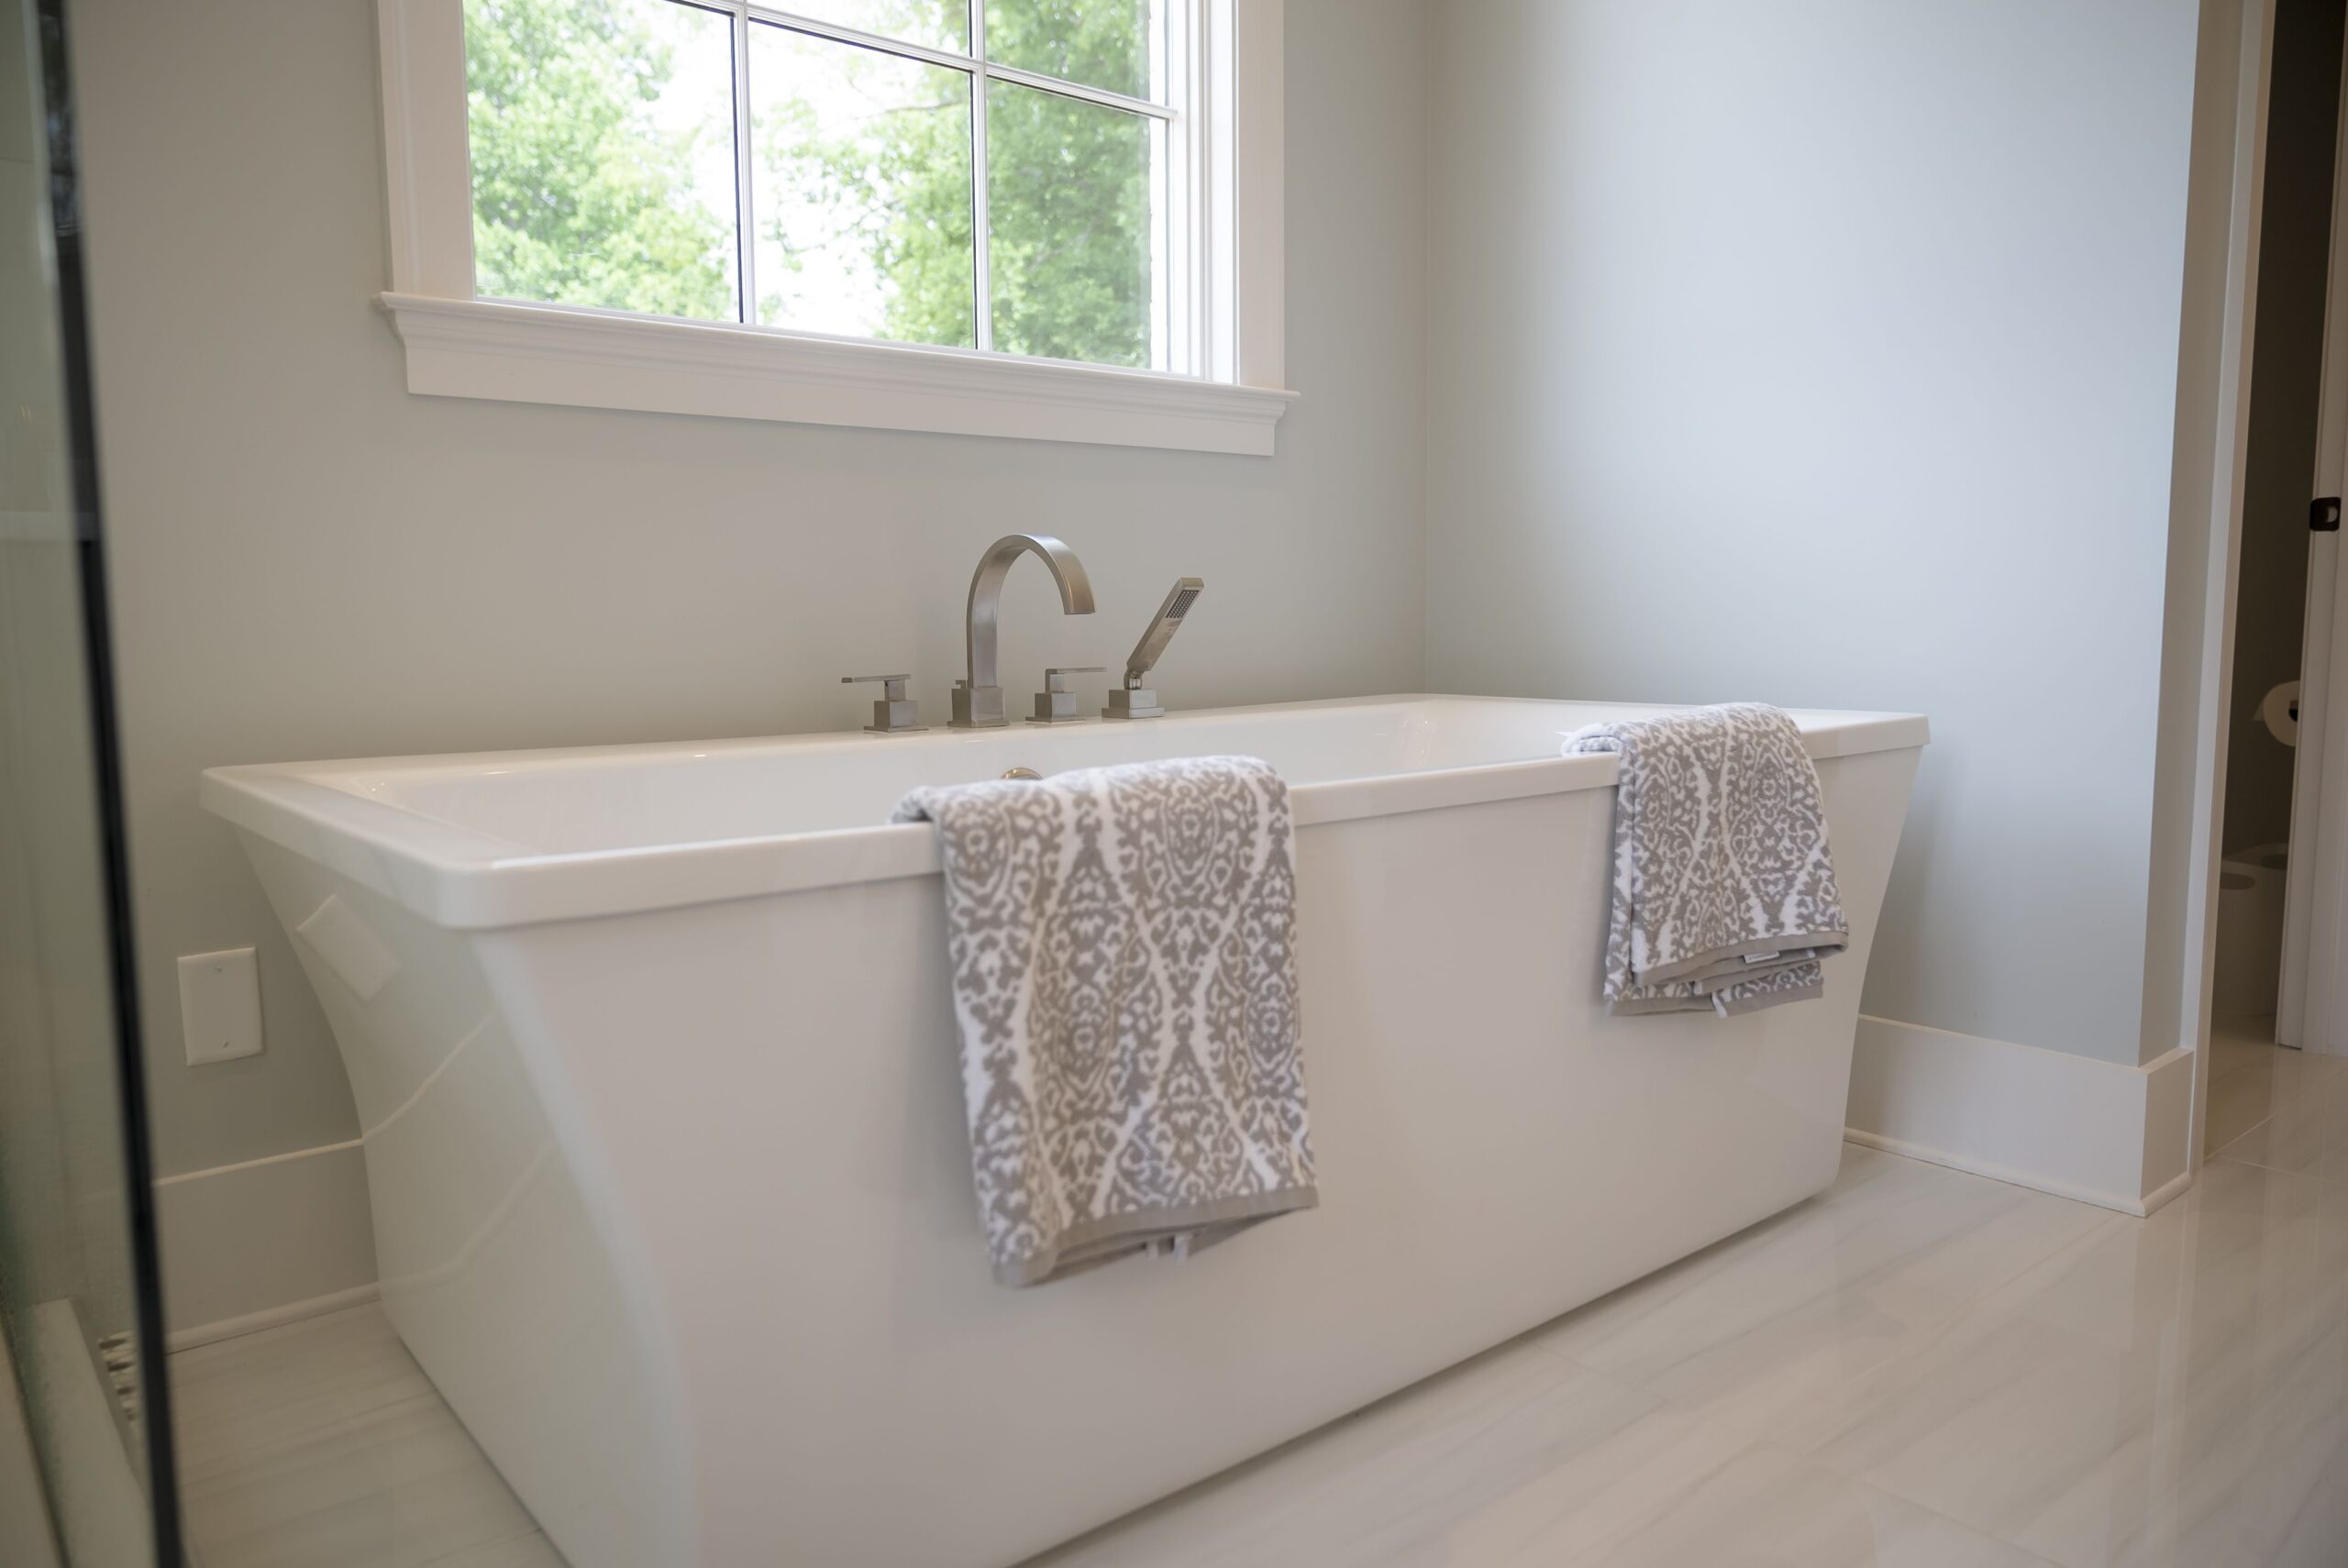 A white bath tub sitting in the middle of a bathroom.